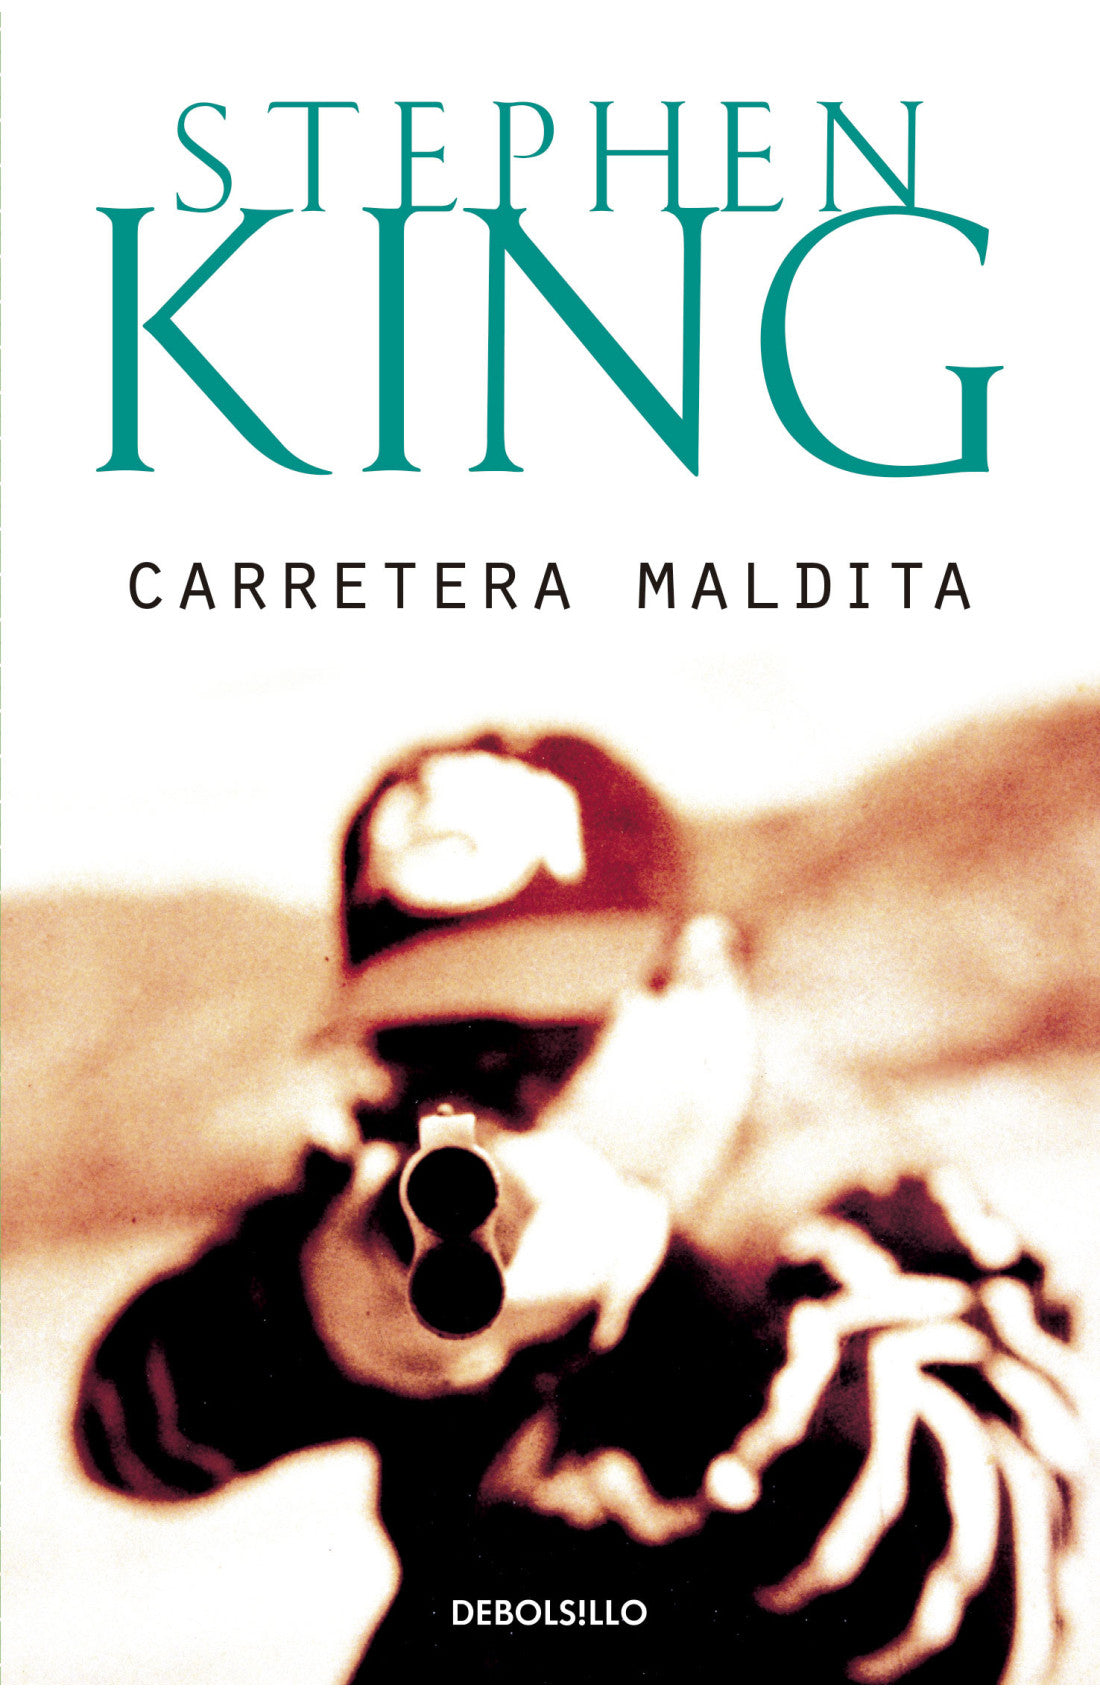 Libro Stephen King - Carretera maldita